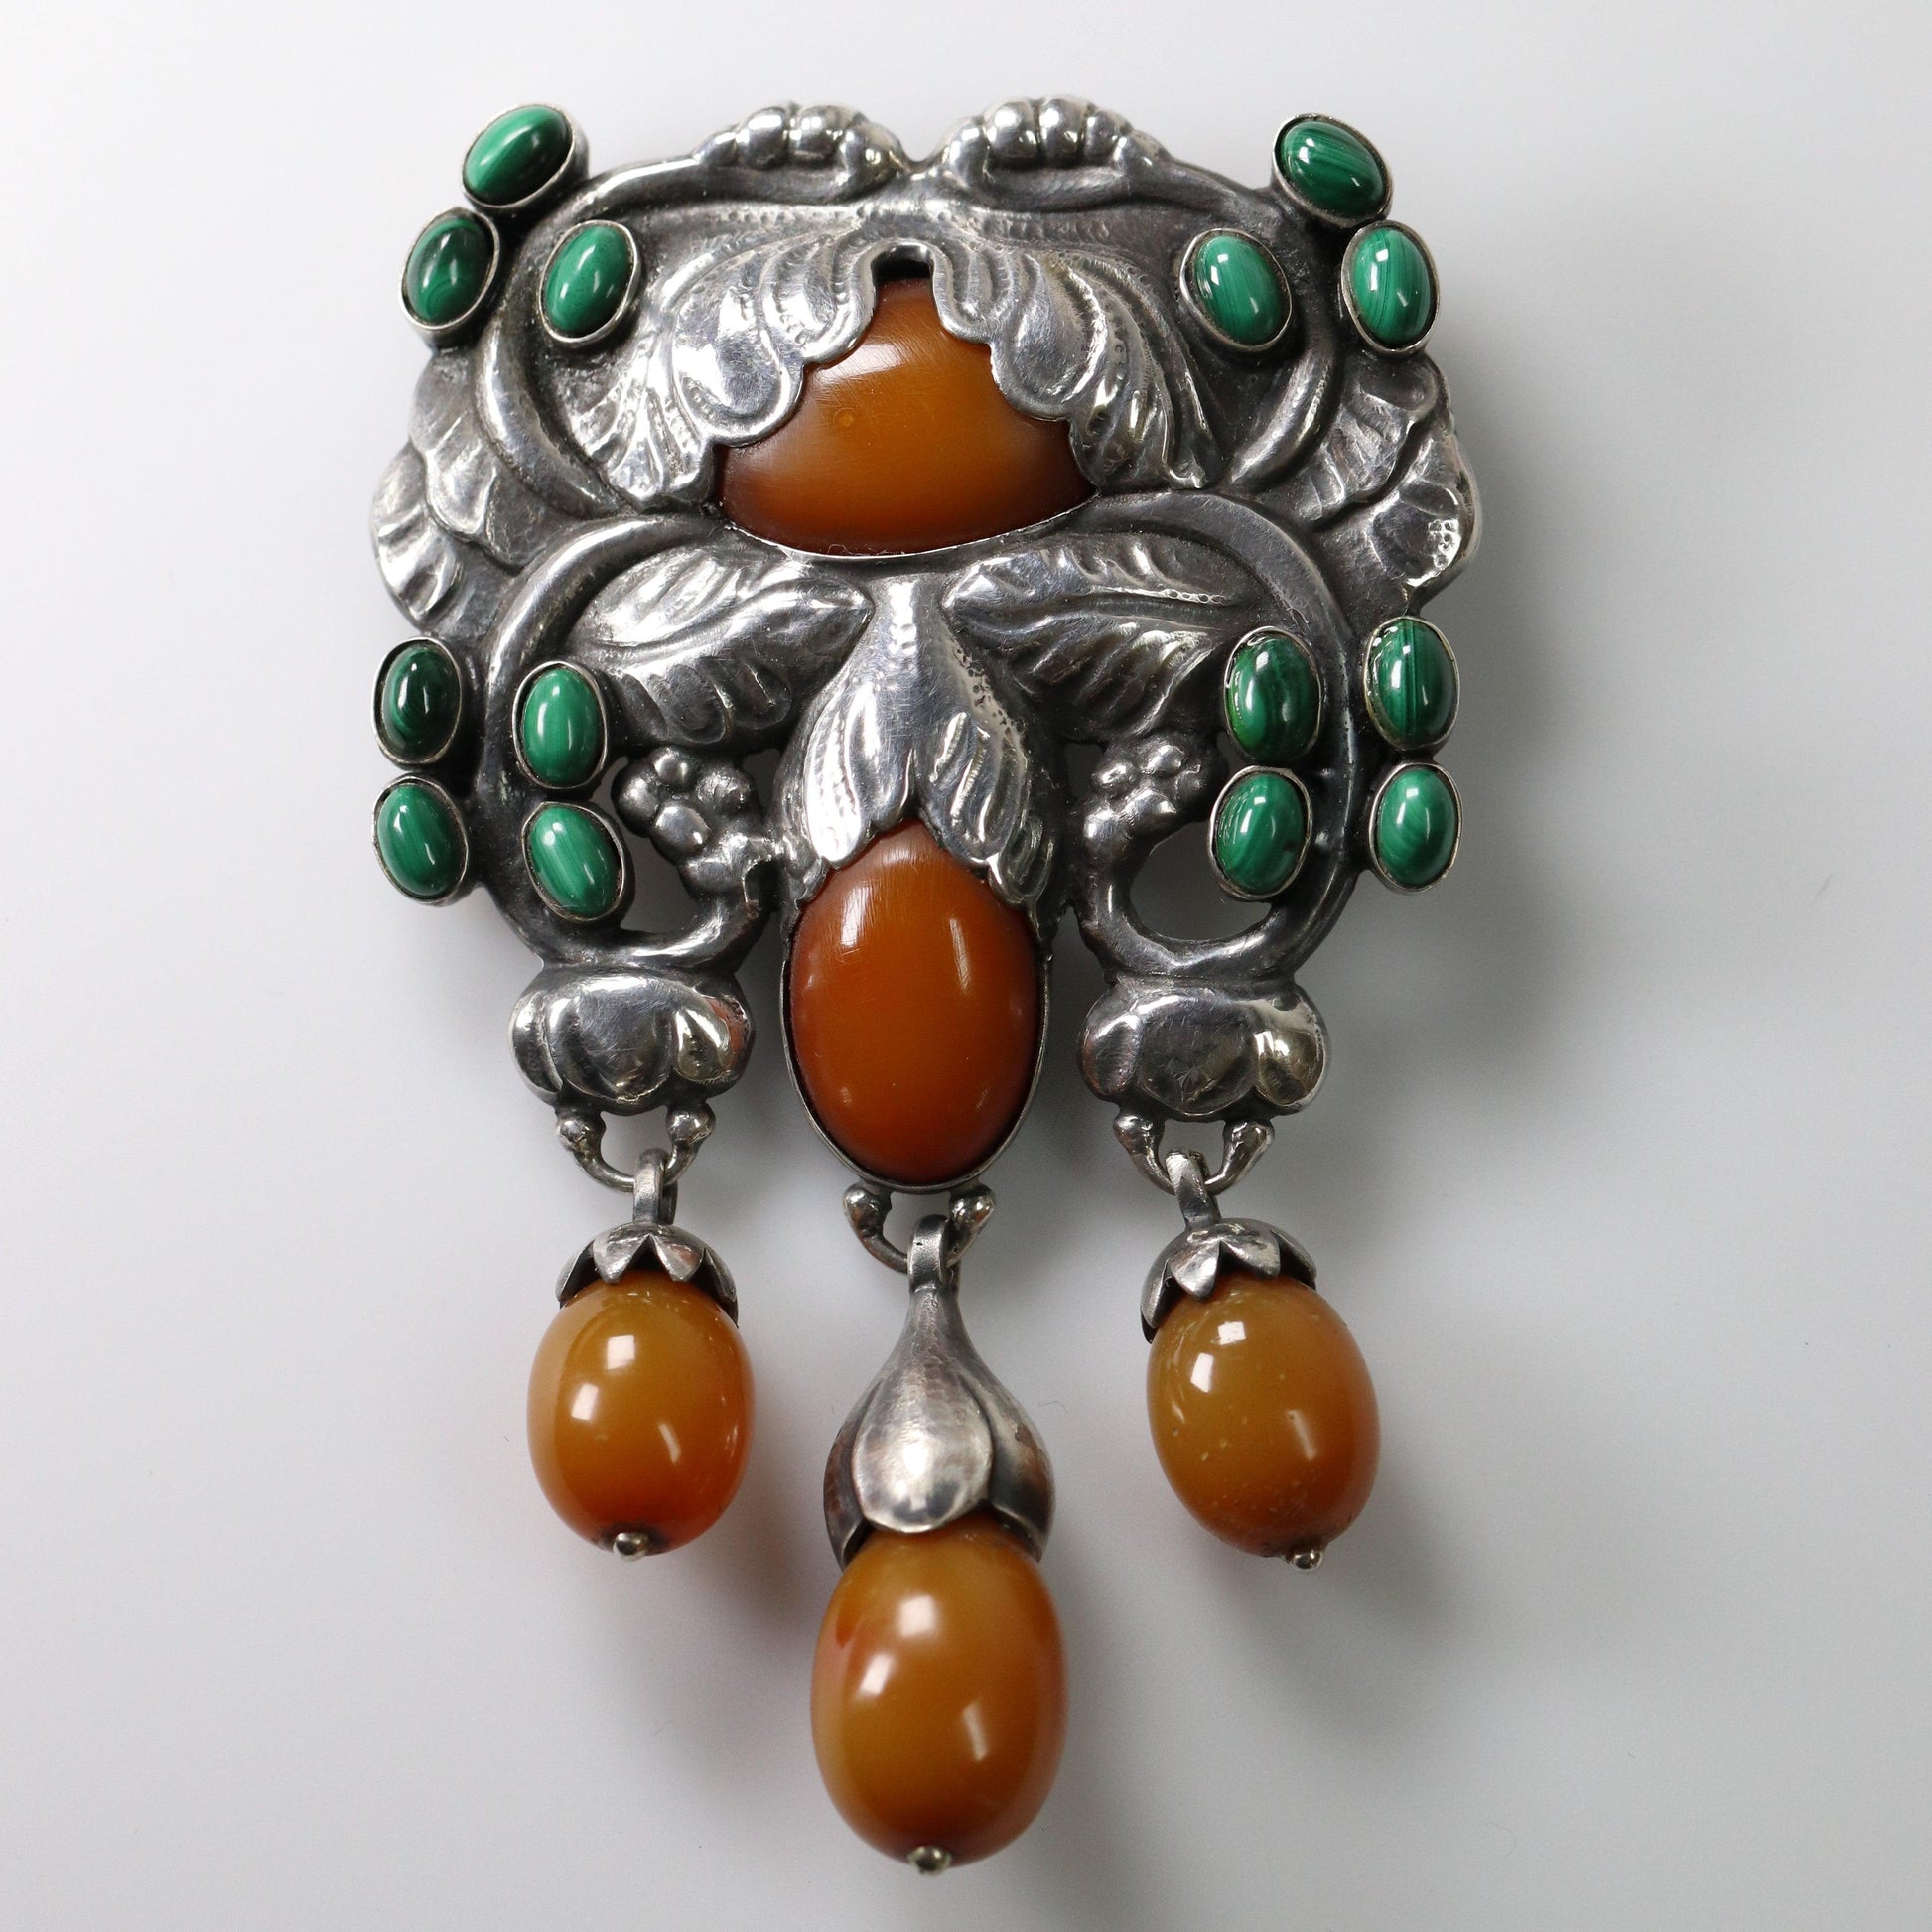 Antique Georg Jensen Jewelry | Rare Art Nouveau Master Brooch 96 - Carmel Fine Silver Jewelry